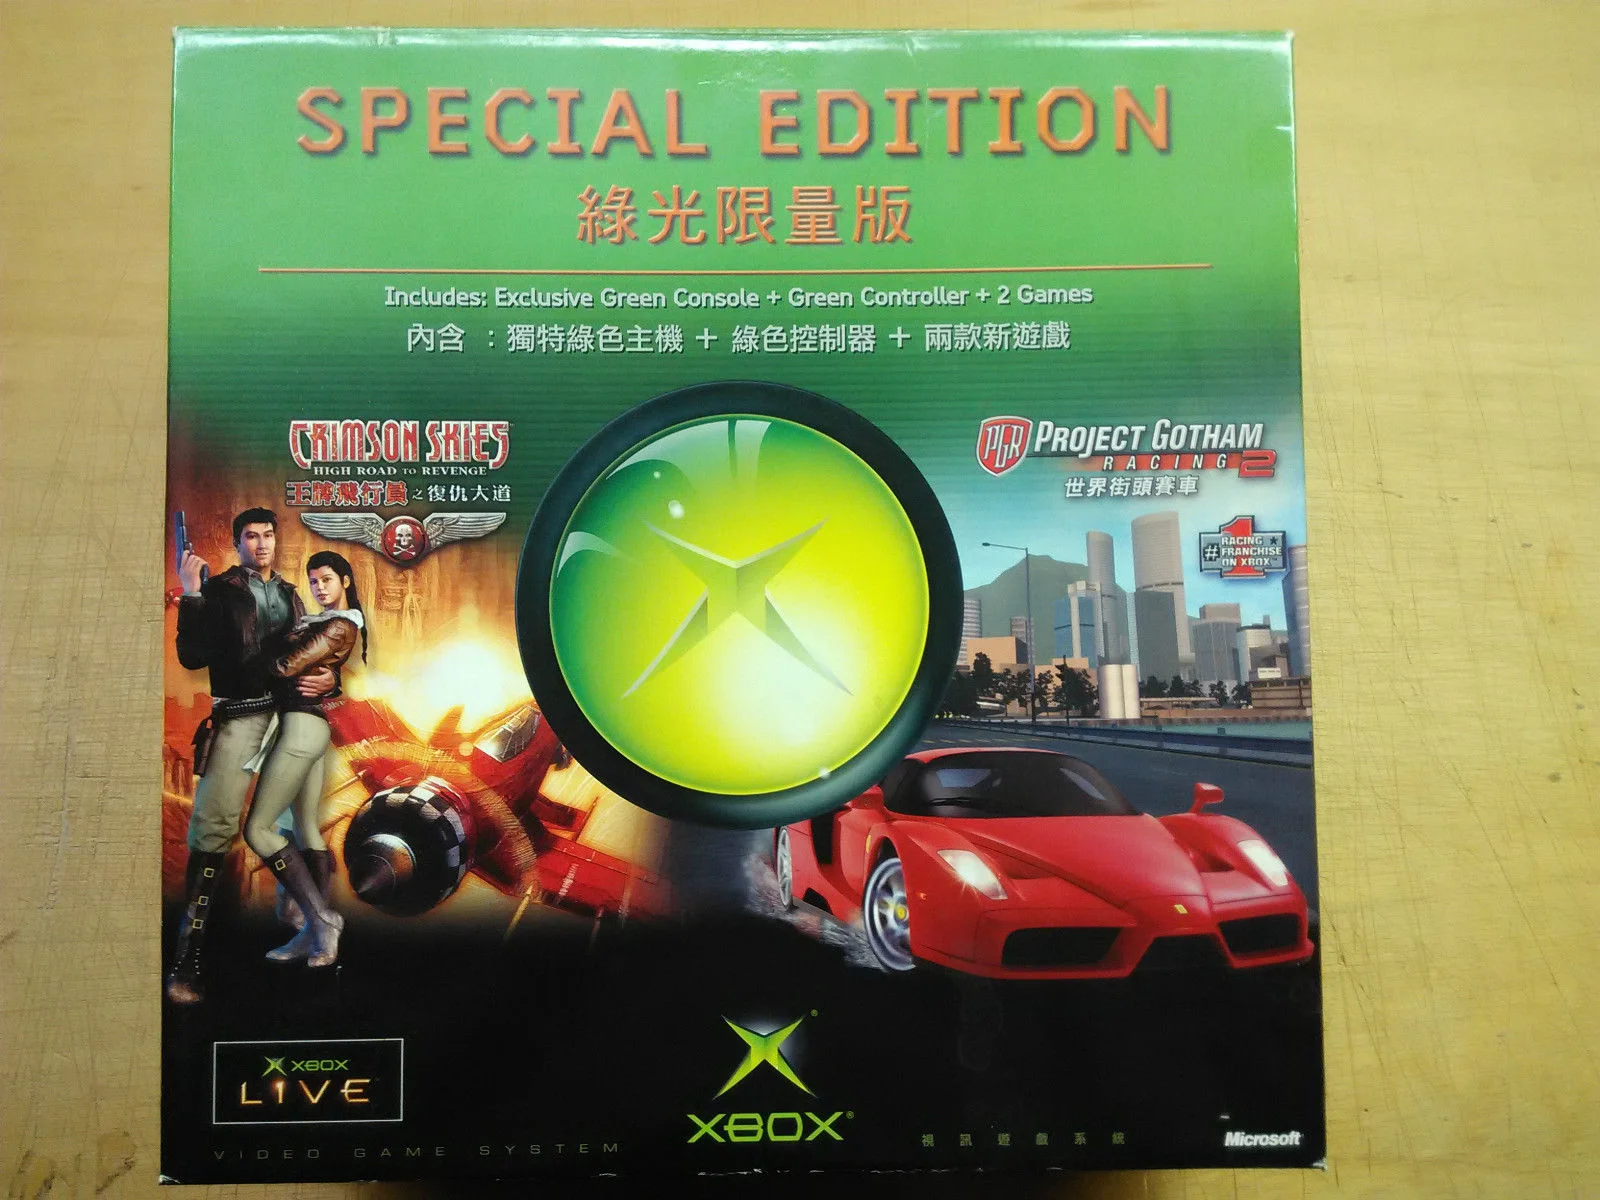  Microsoft Xbox Crimson Skies + Project Gotham Racing 2 Bundle